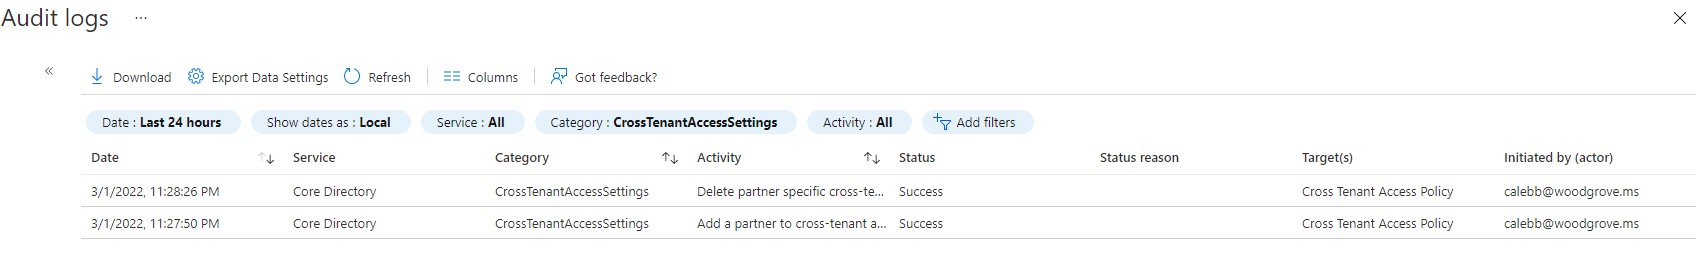 Screenshot of the audit logs for cross-tenant access settings.